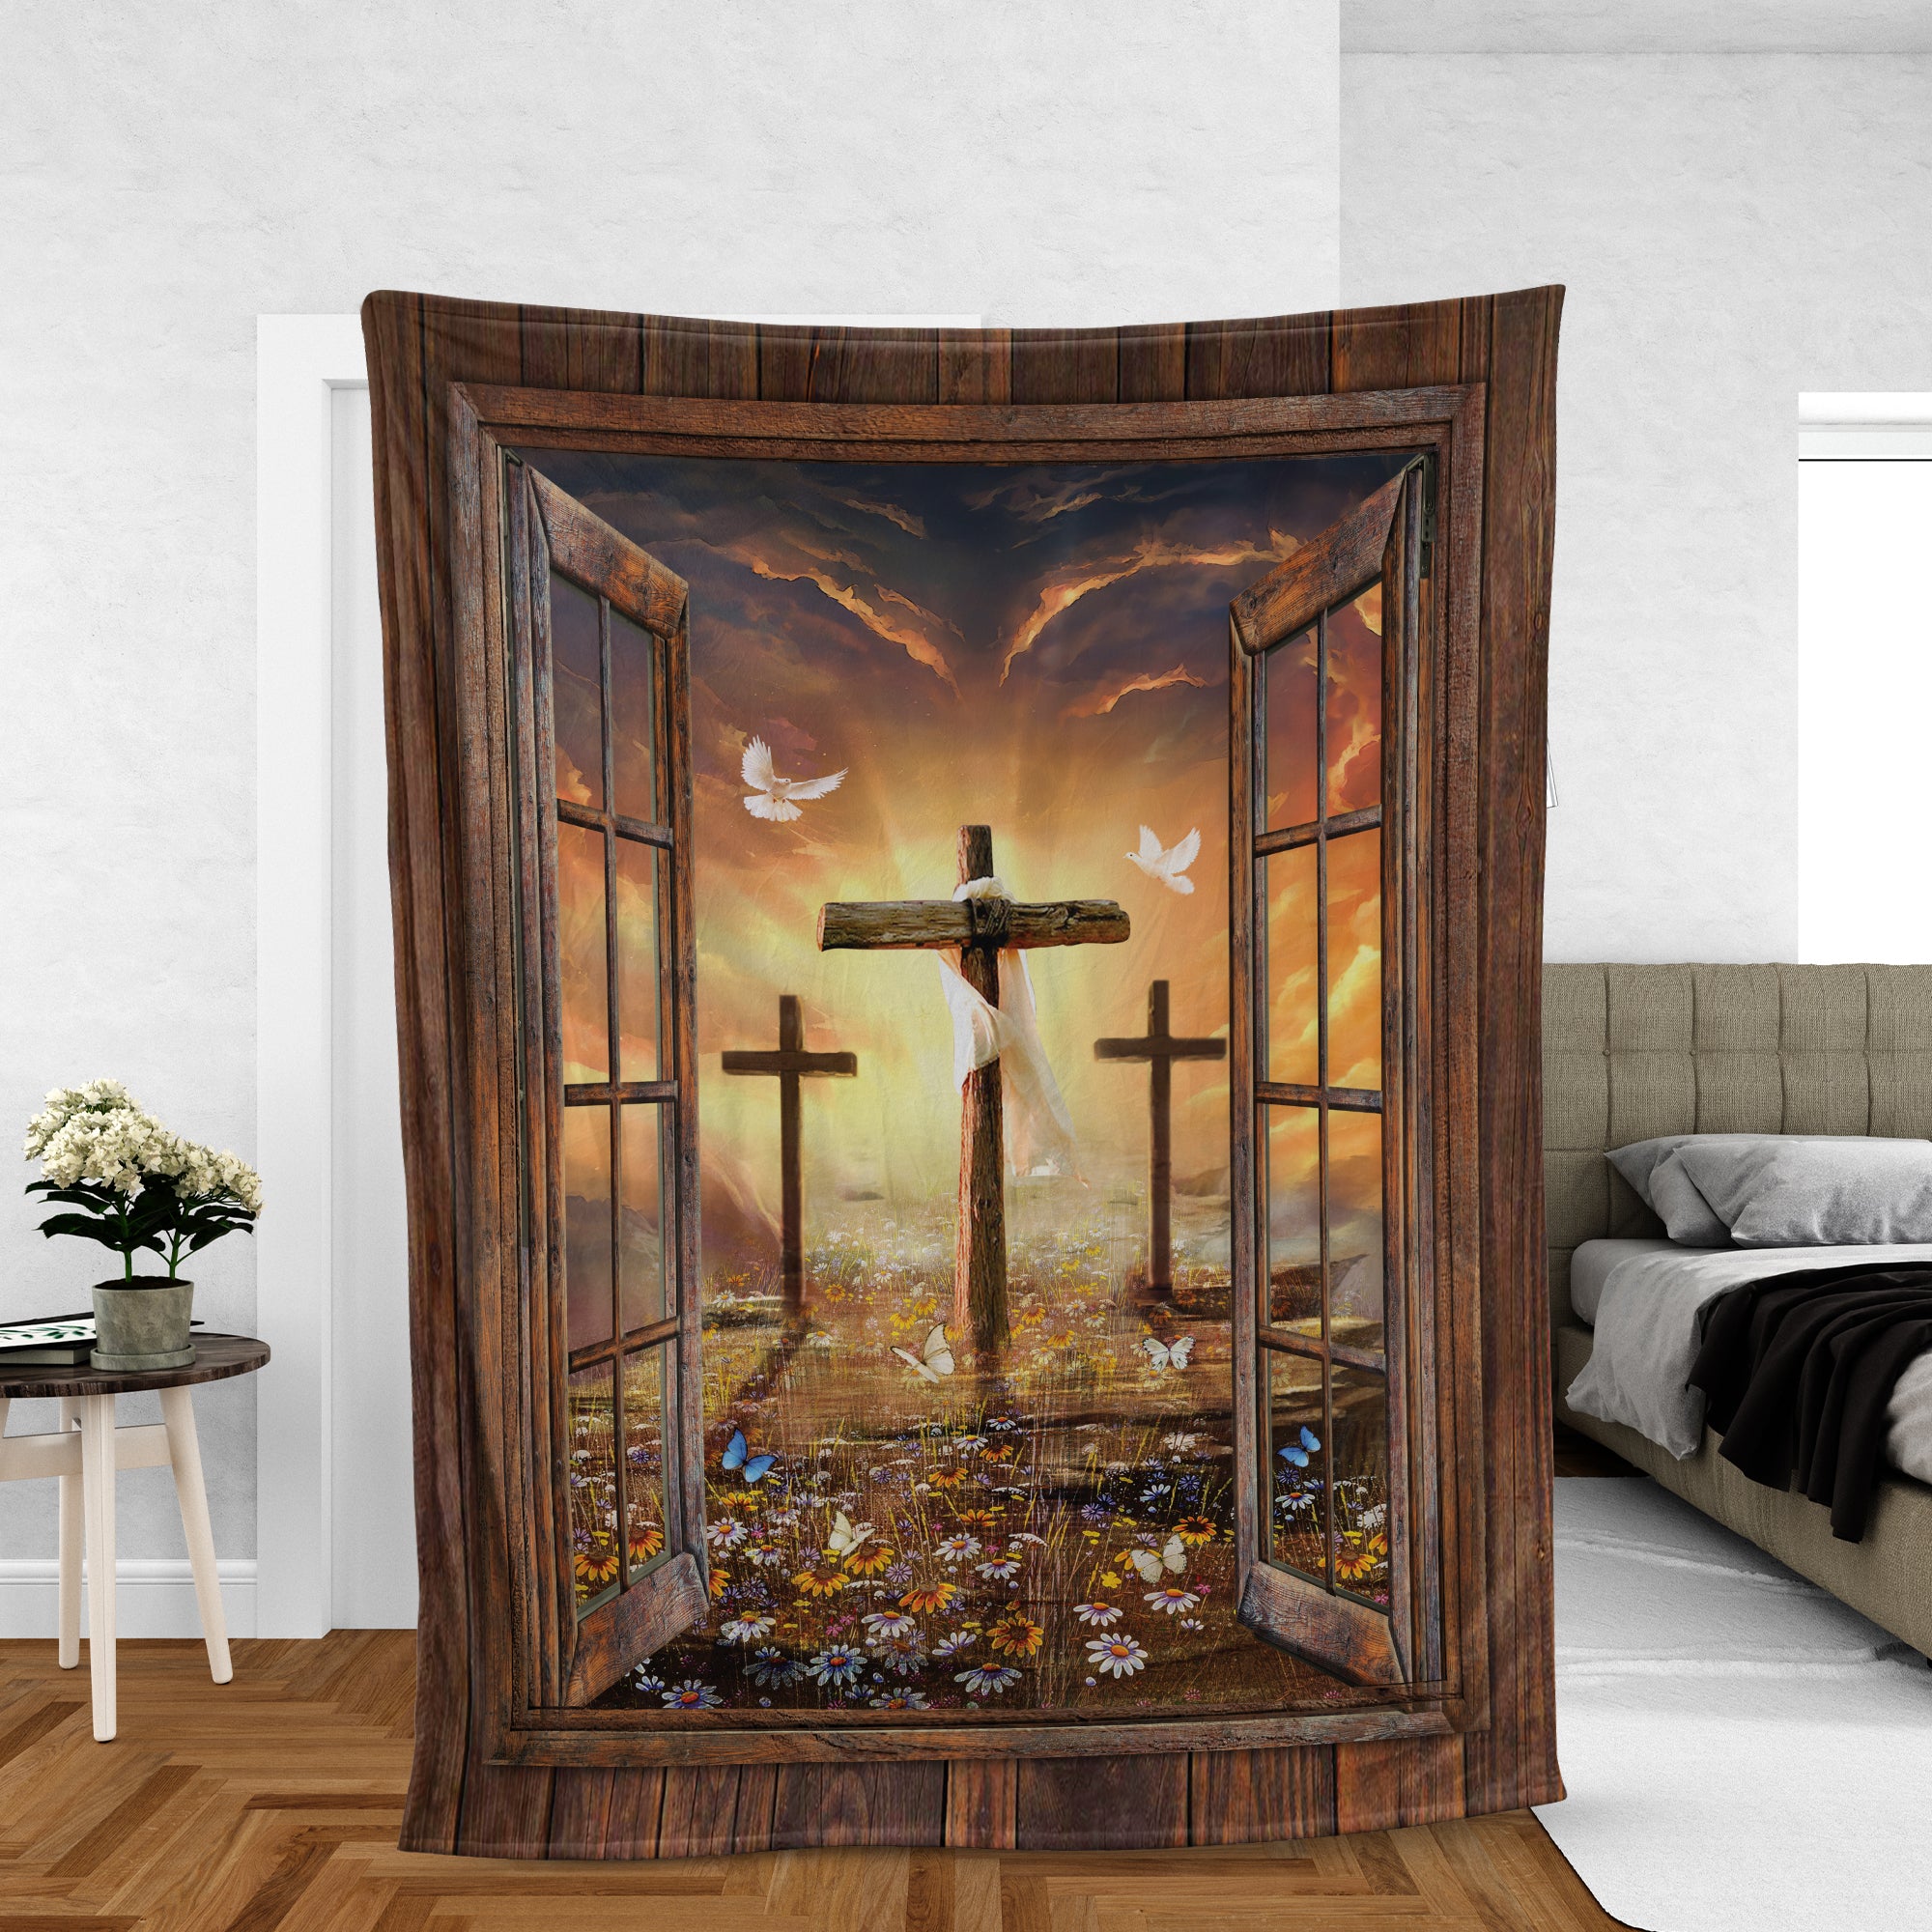 Christian Throw Blanket, Faith Blanket, Jesus Blanket, Inspirational Gift - Window Frame, Sunset Painting, Path To Heaven, The Three Crosses